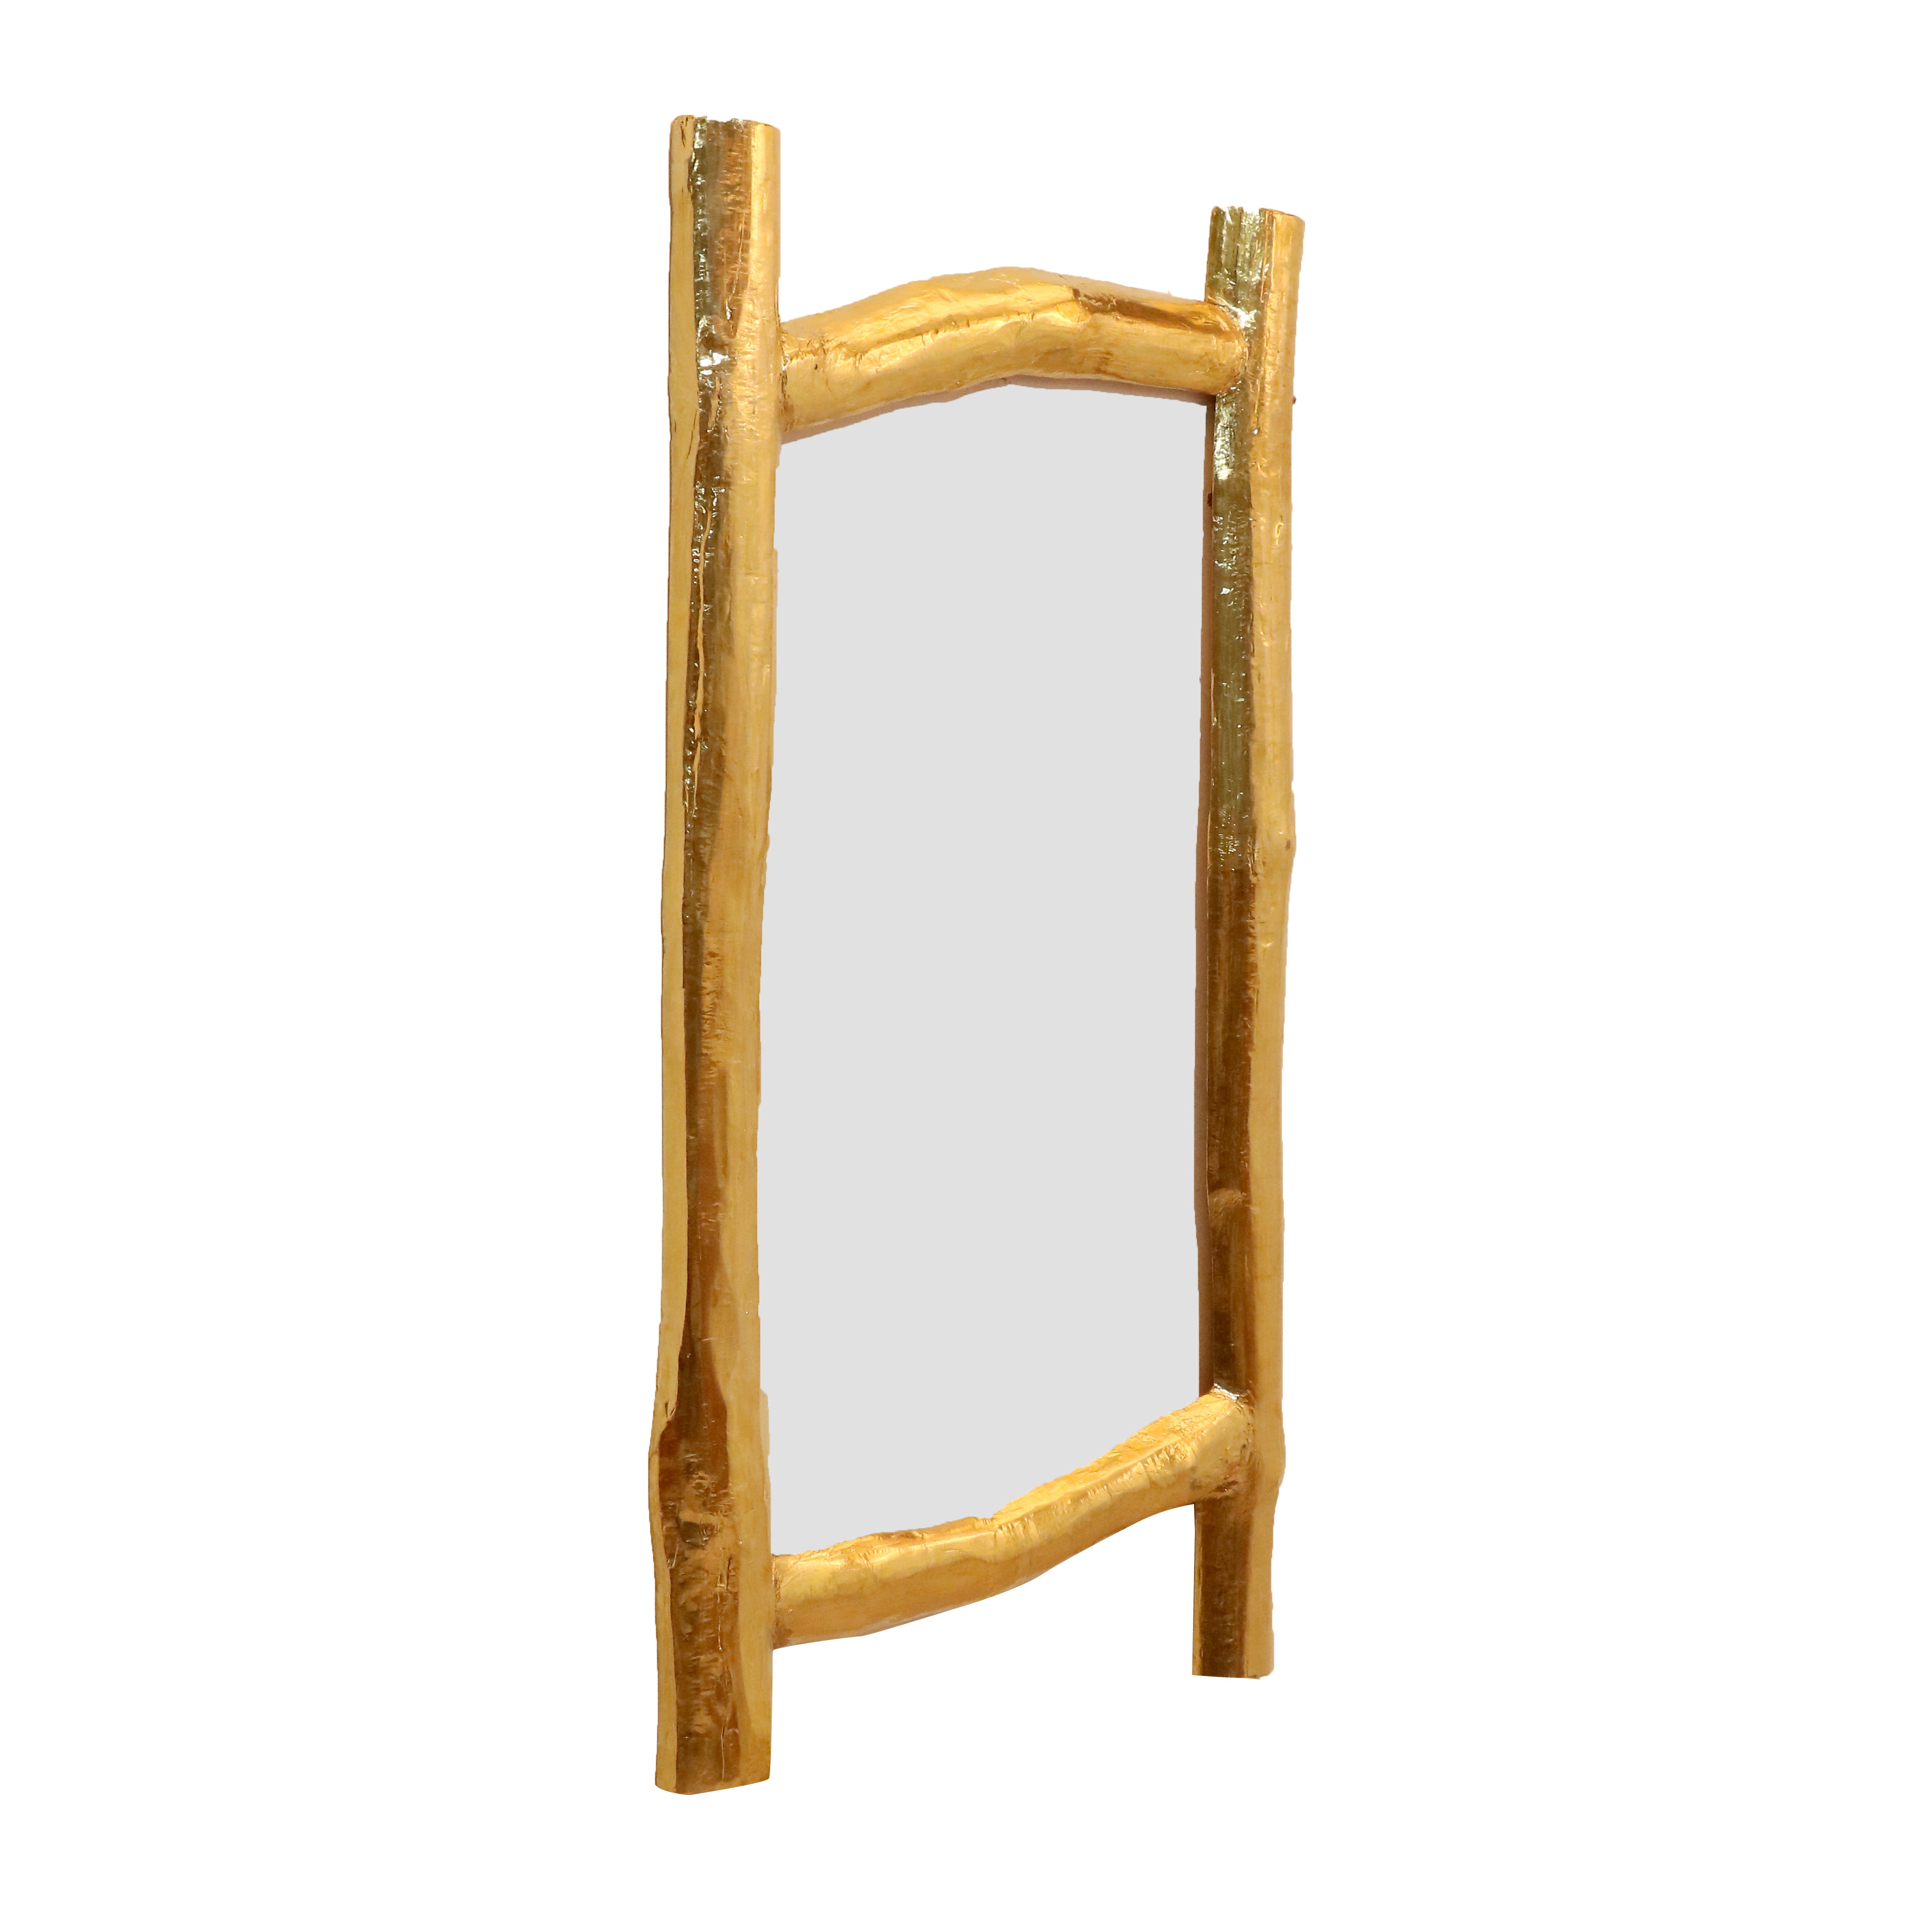 Solid Wood Rustic Mirror Frame Mirror